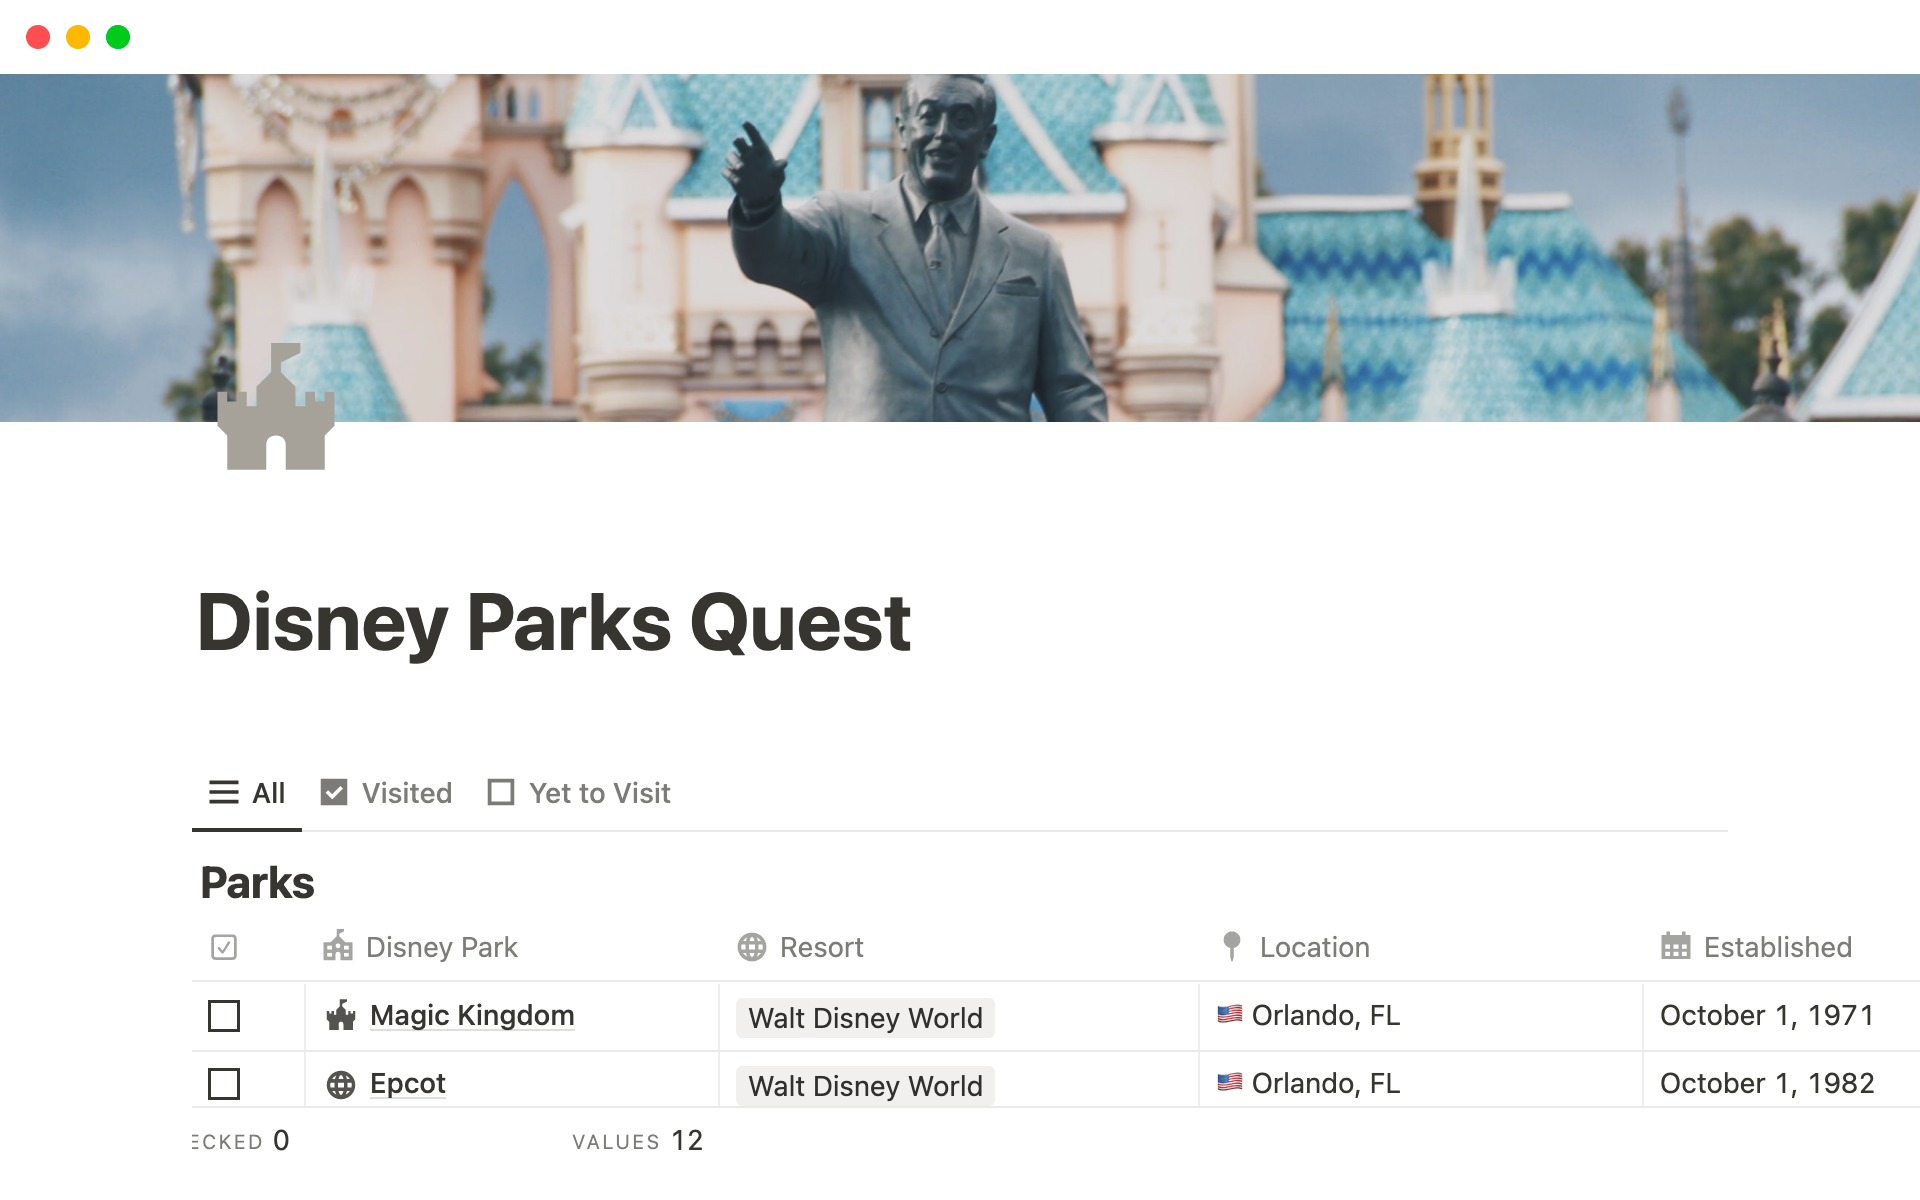 Mallin esikatselu nimelle Disney Parks Quest